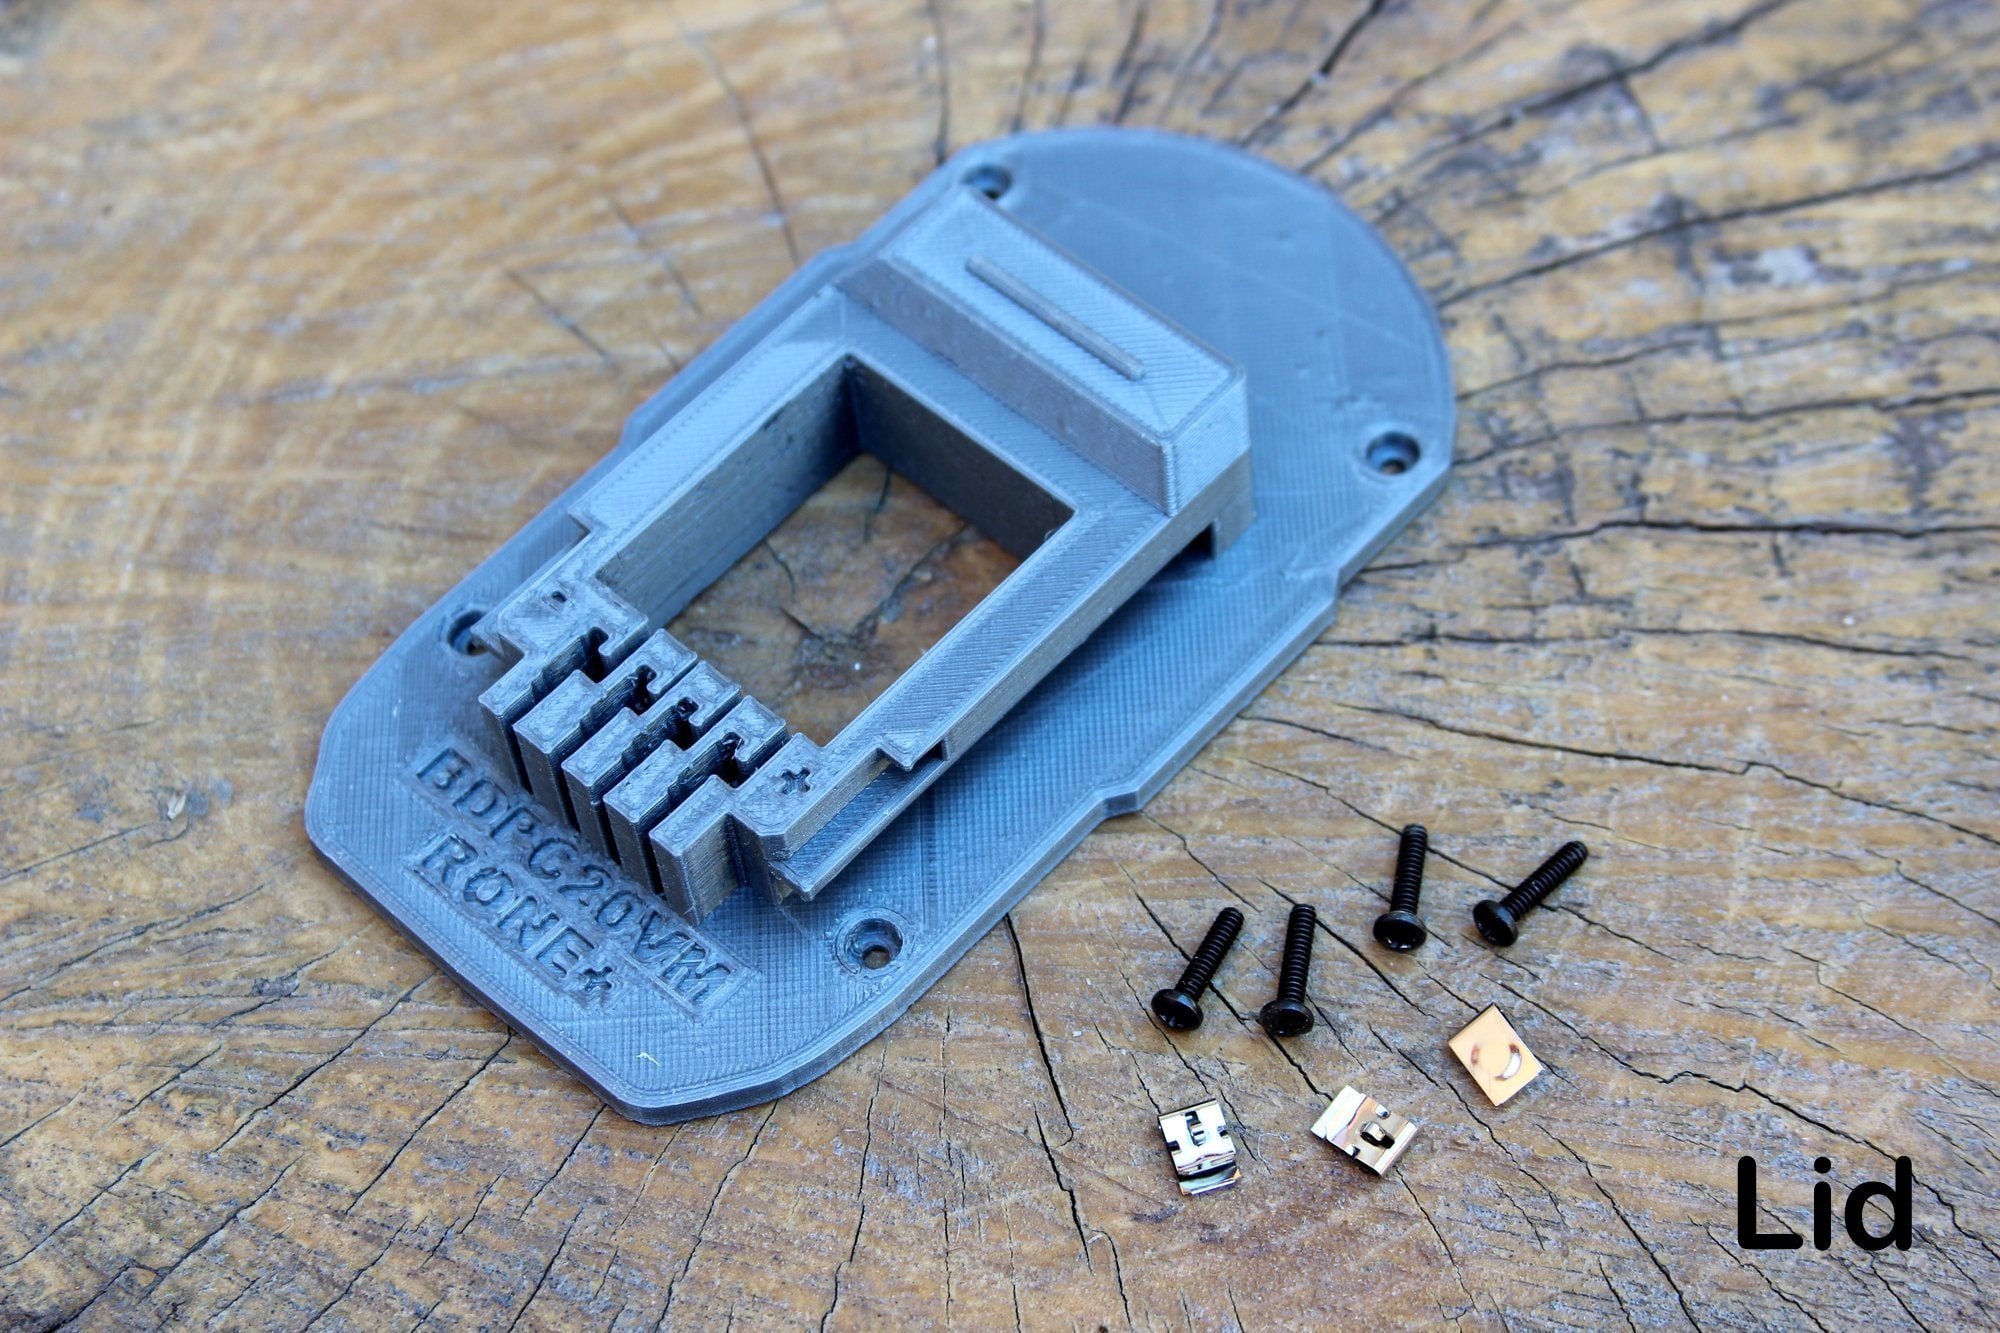 Black&Decker Adapter for Ryobi Battery! - Instructables